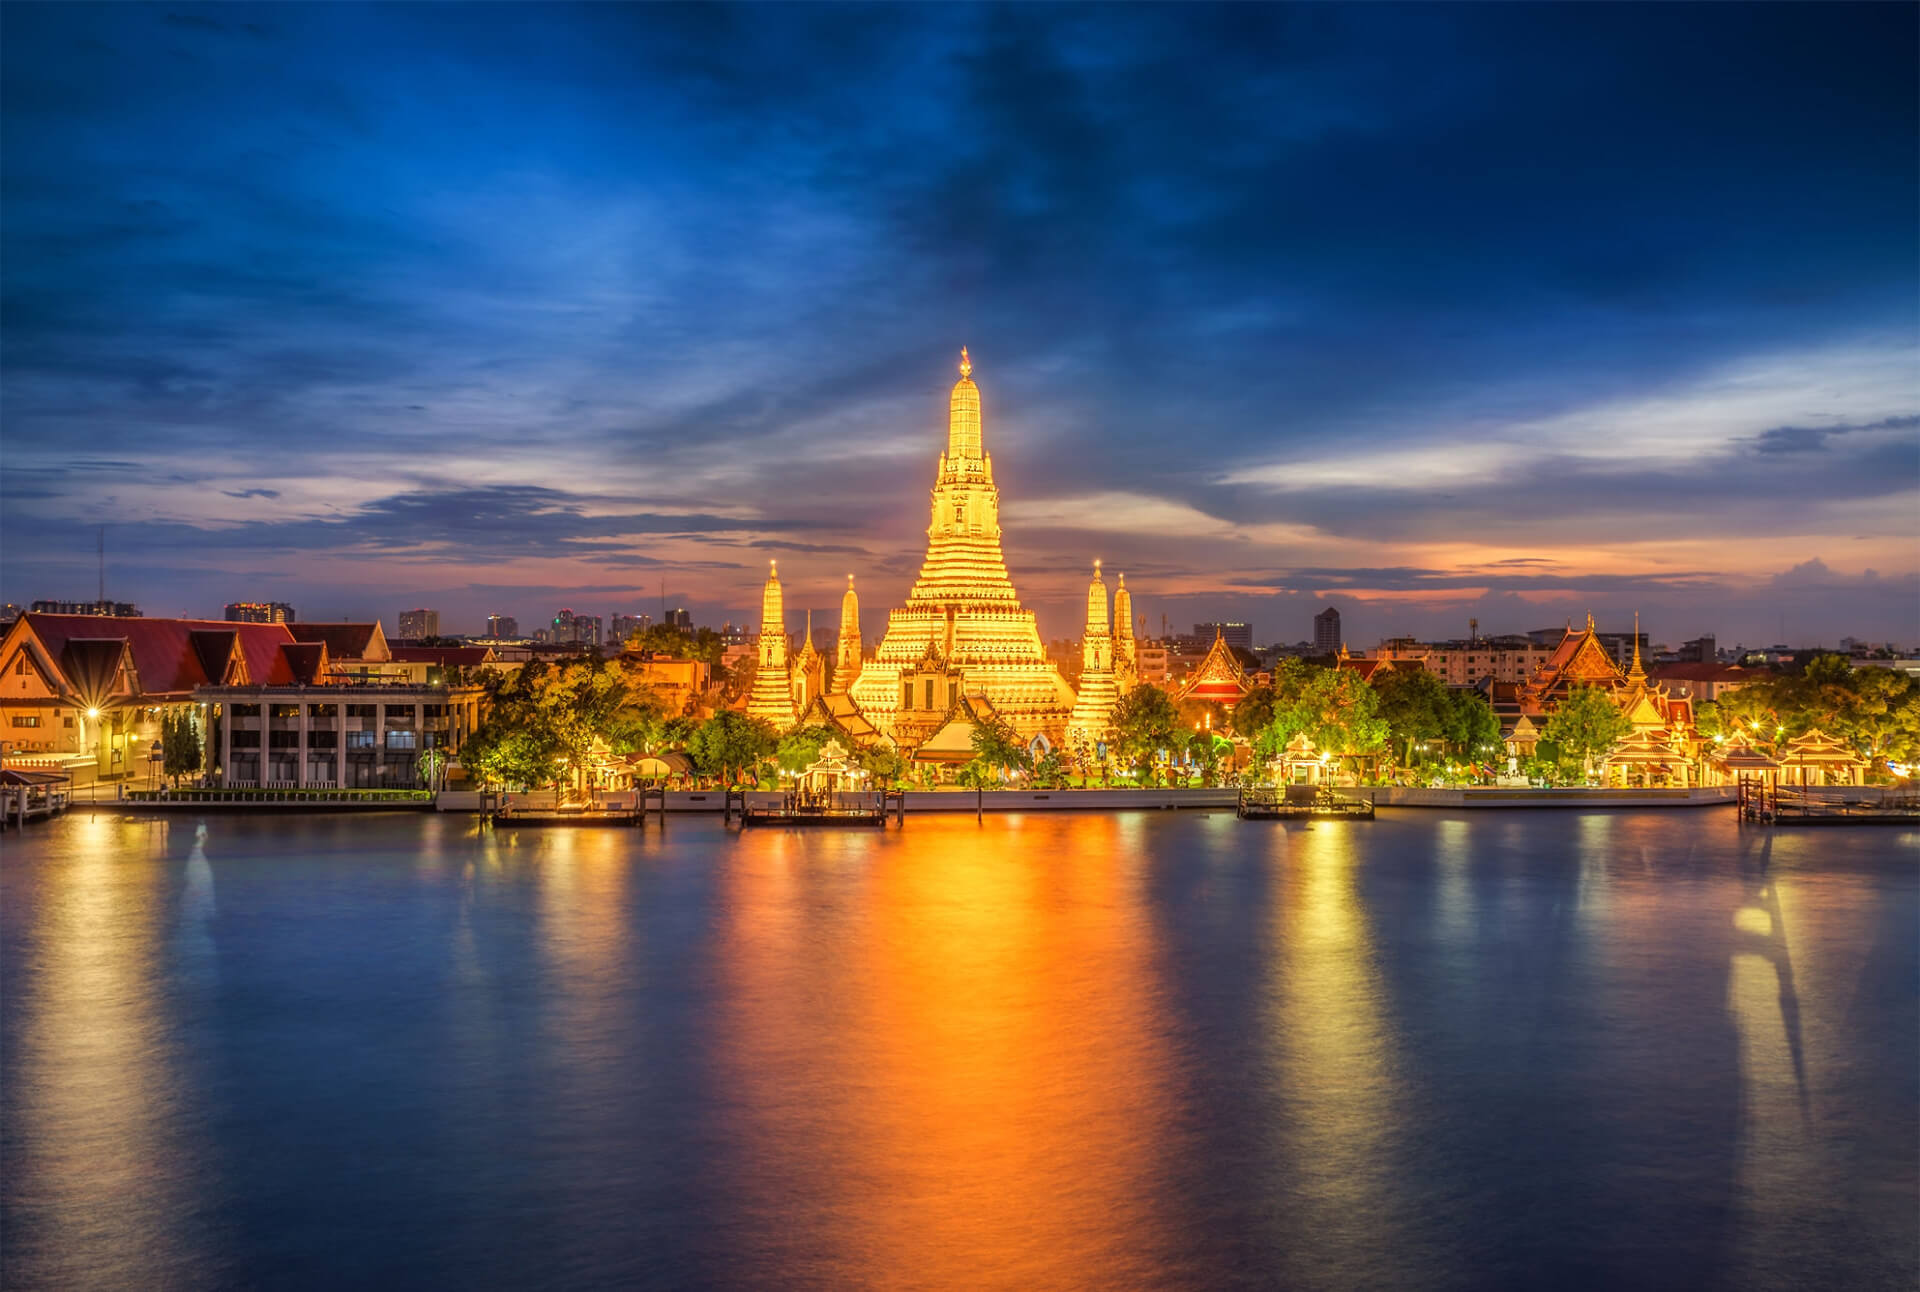 https://explorekuwait.com/wp-content/uploads/2021/02/1177404879-sunset-city-skyline-at-Wat-Arun-temple-and-Chao-Phraya-River-Bangkok.jpg